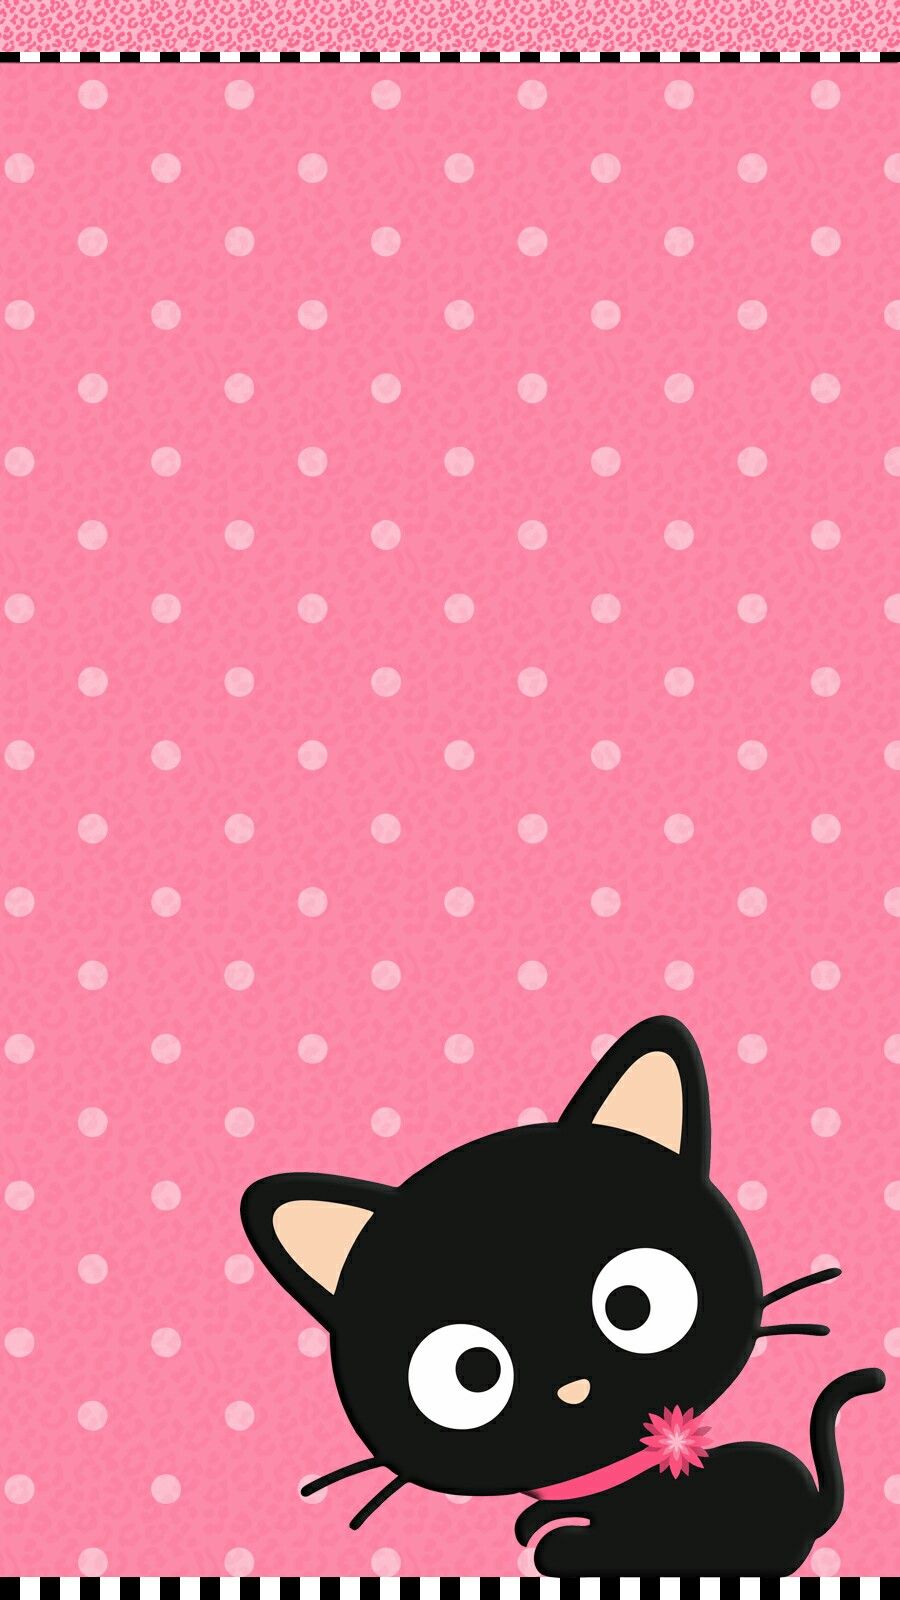 cute cat live wallpaper,pink,cartoon,pattern,black cat,polka dot